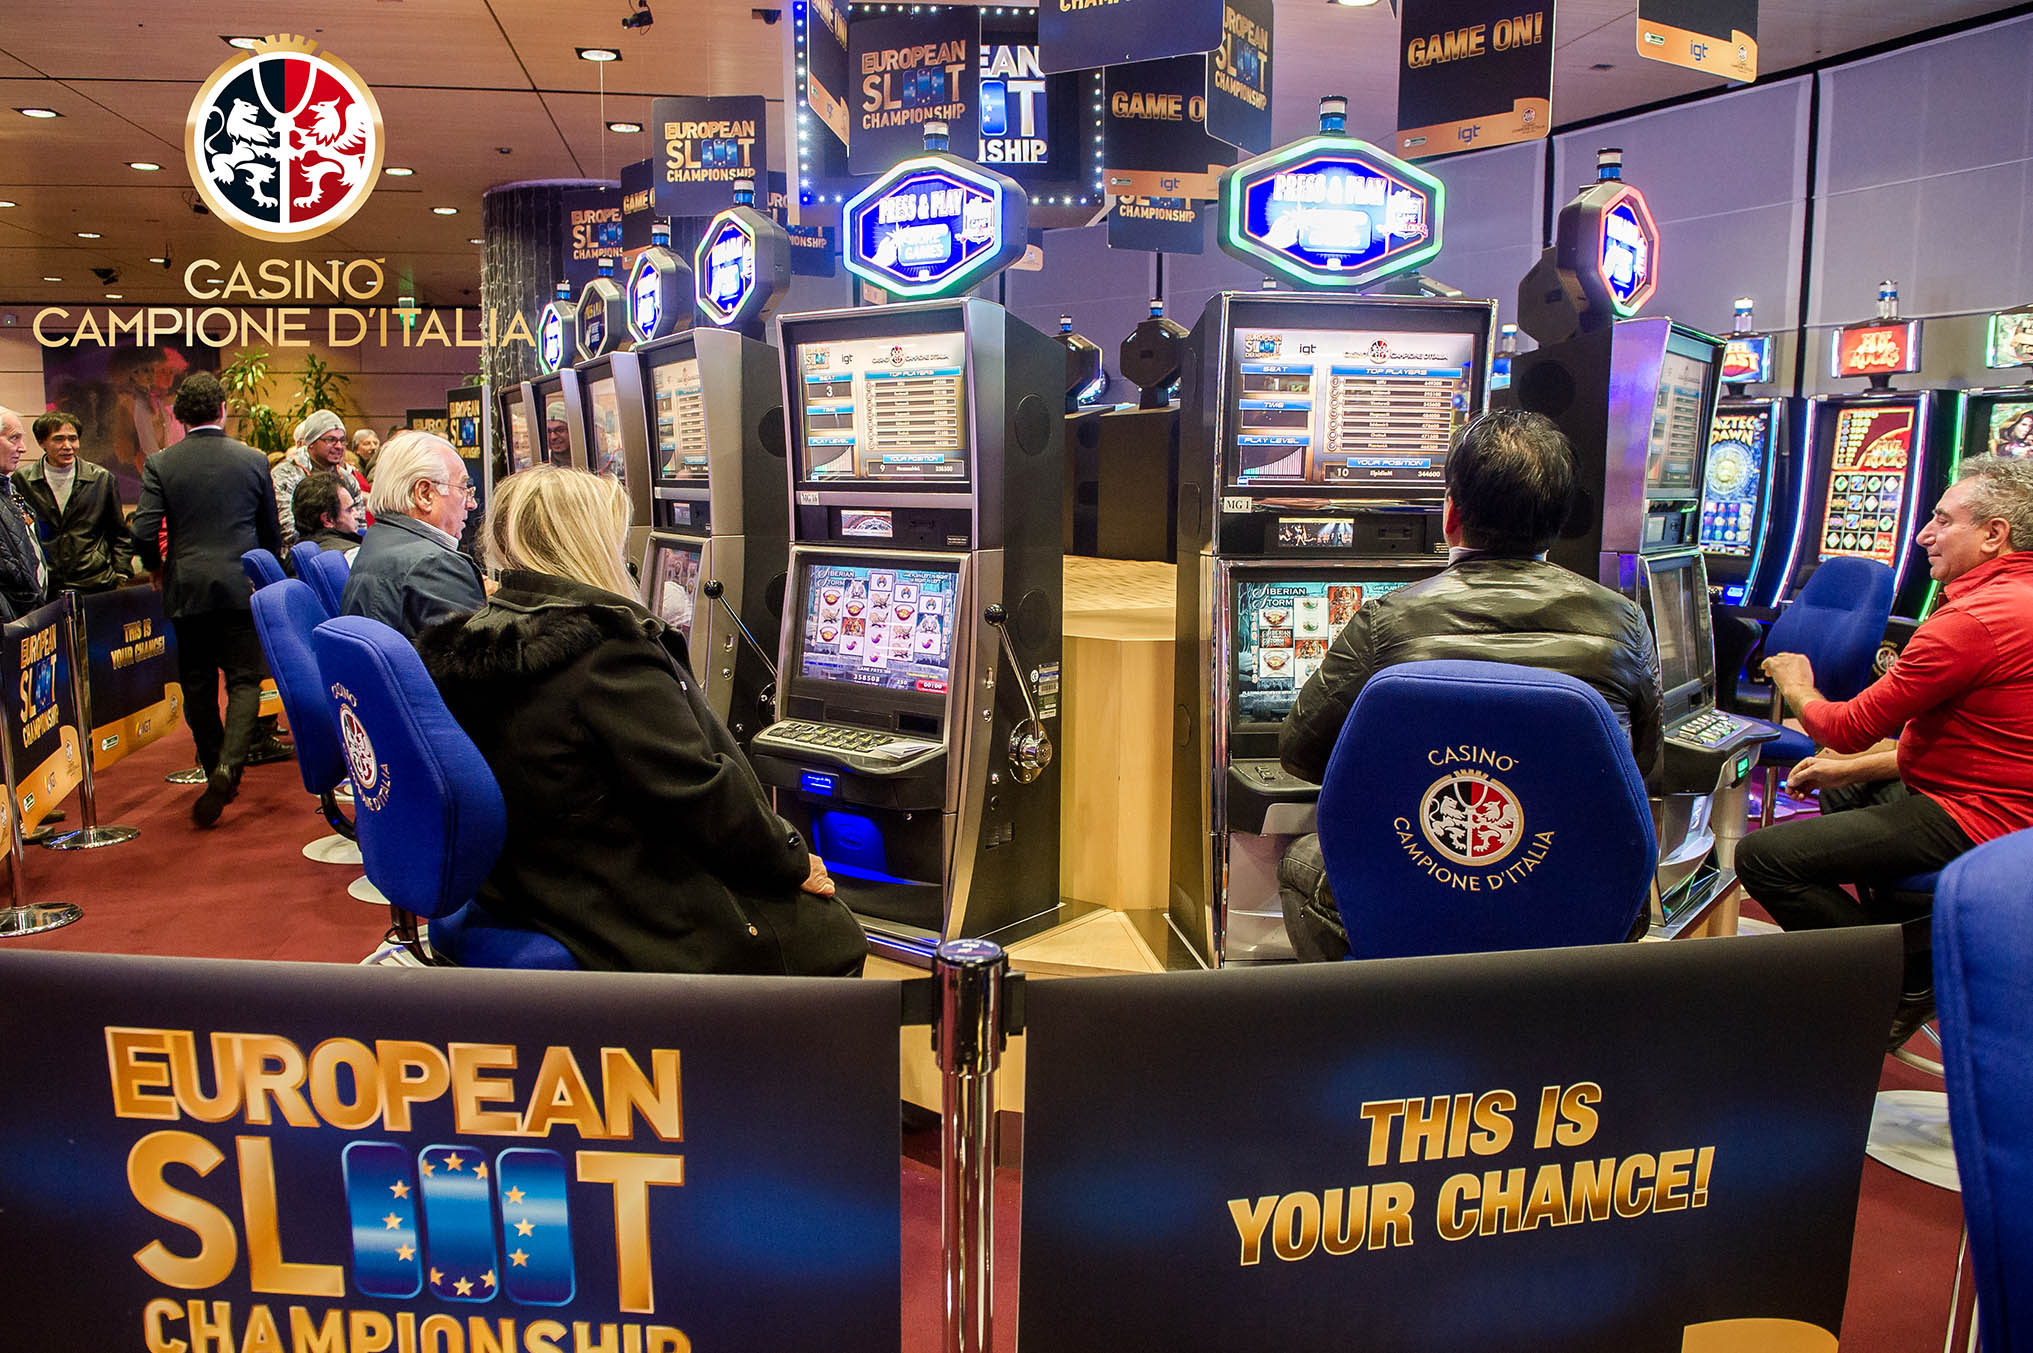 European Slot Championship